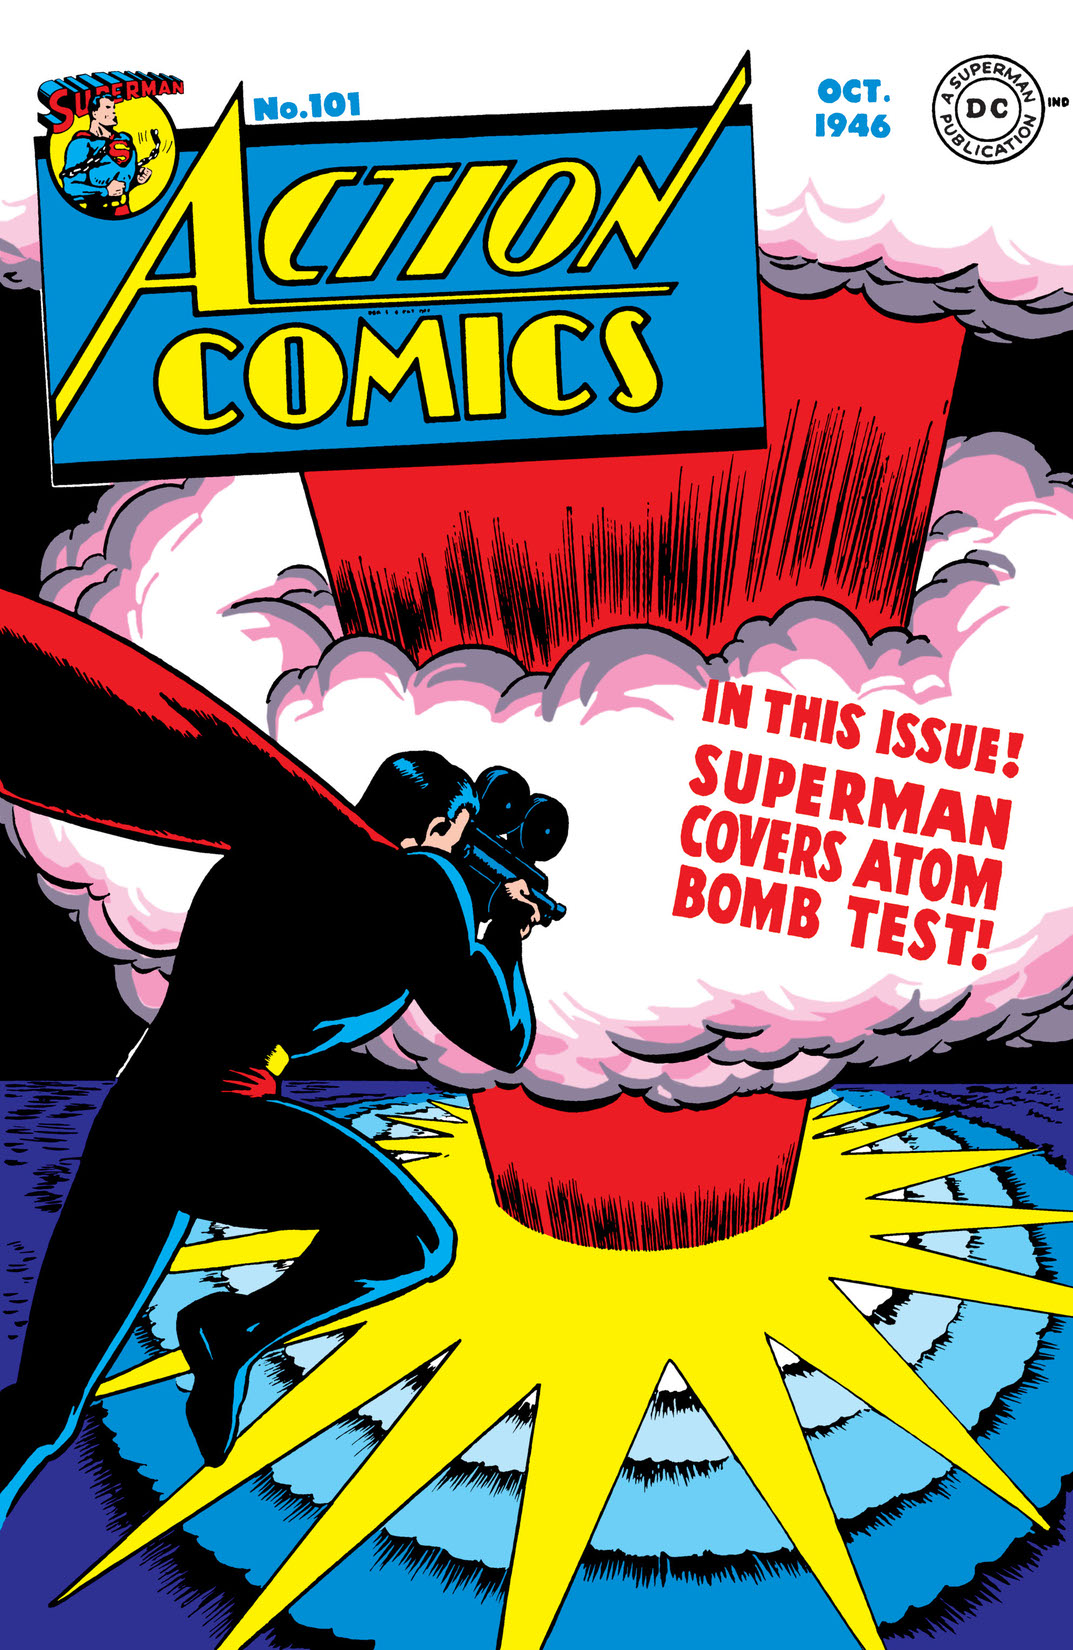 Action Comics (1938-) #101 preview images